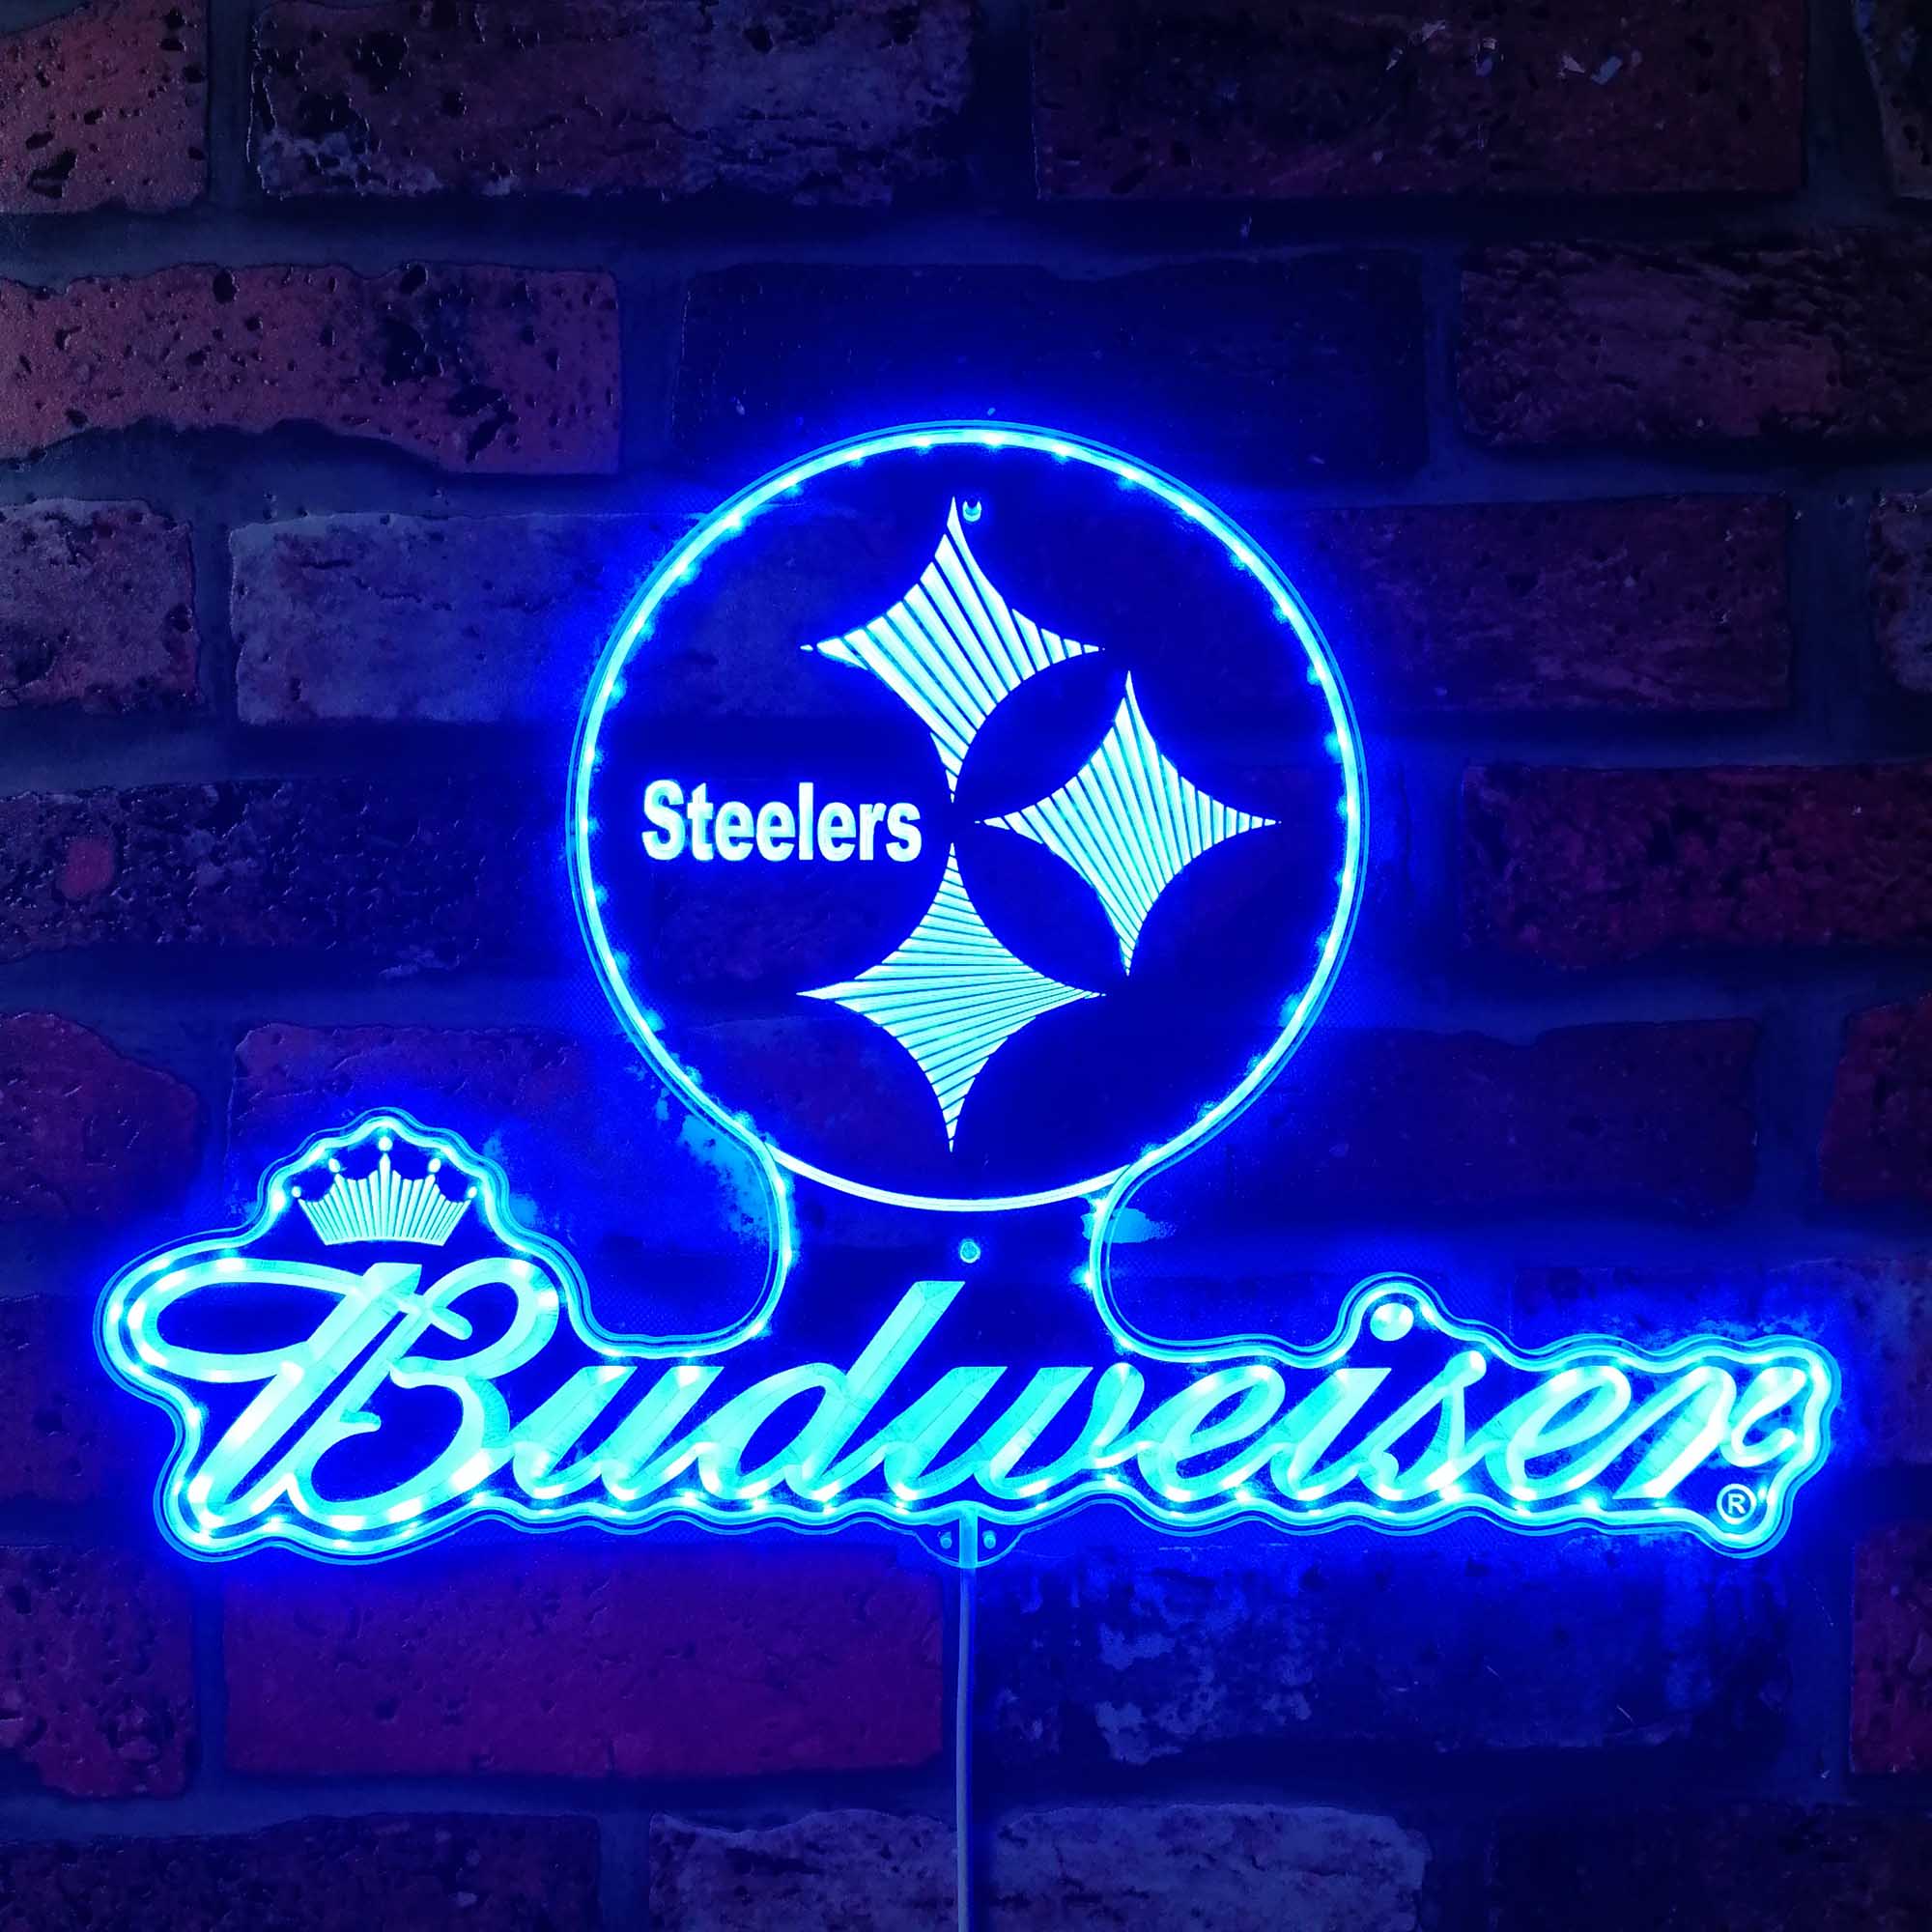 Steelers Buderweisers Dynamic RGB Edge Lit LED Sign